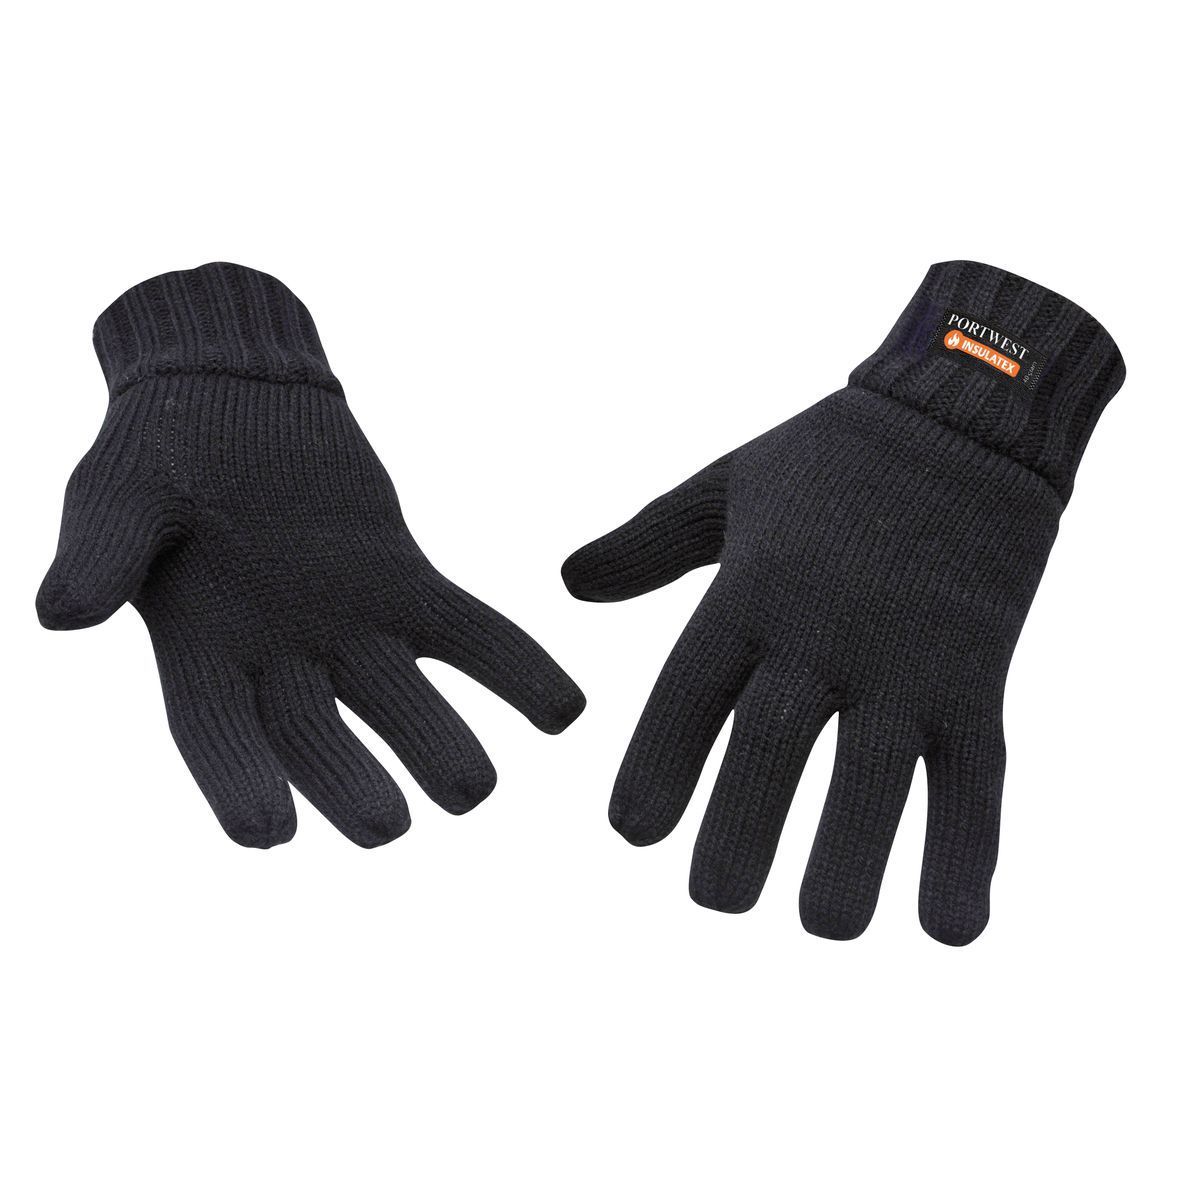 Style GL13 Insulatex Knit Glove-1